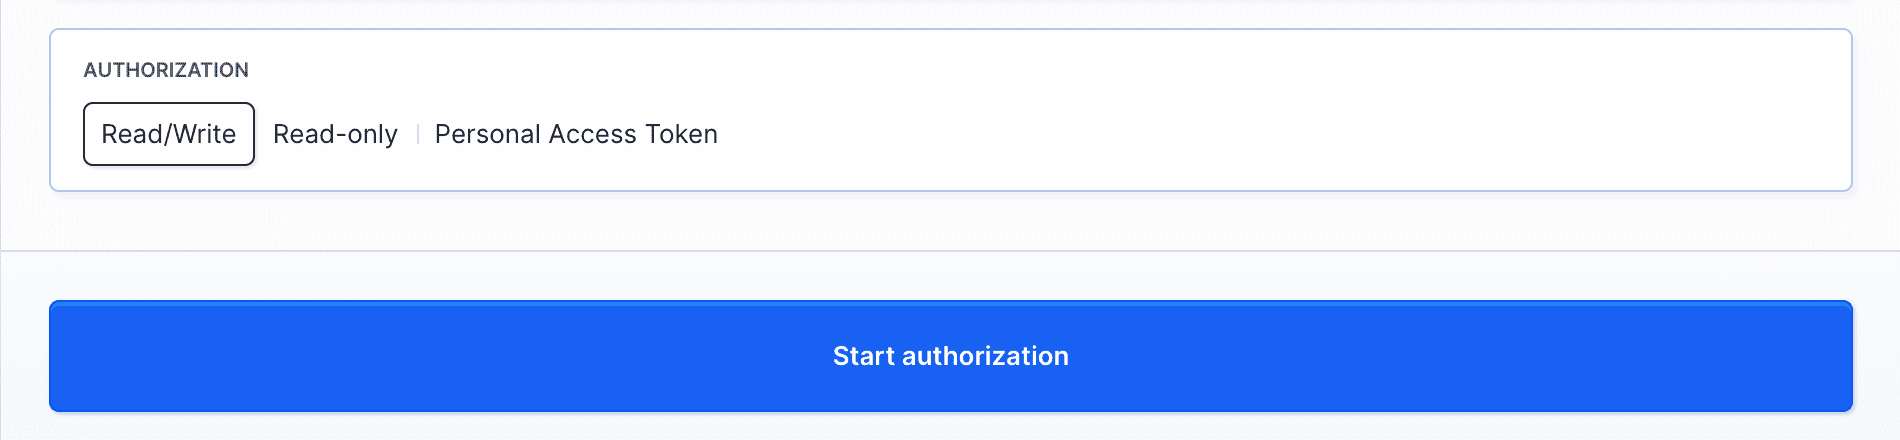 GitHub OAuth authorization configuration